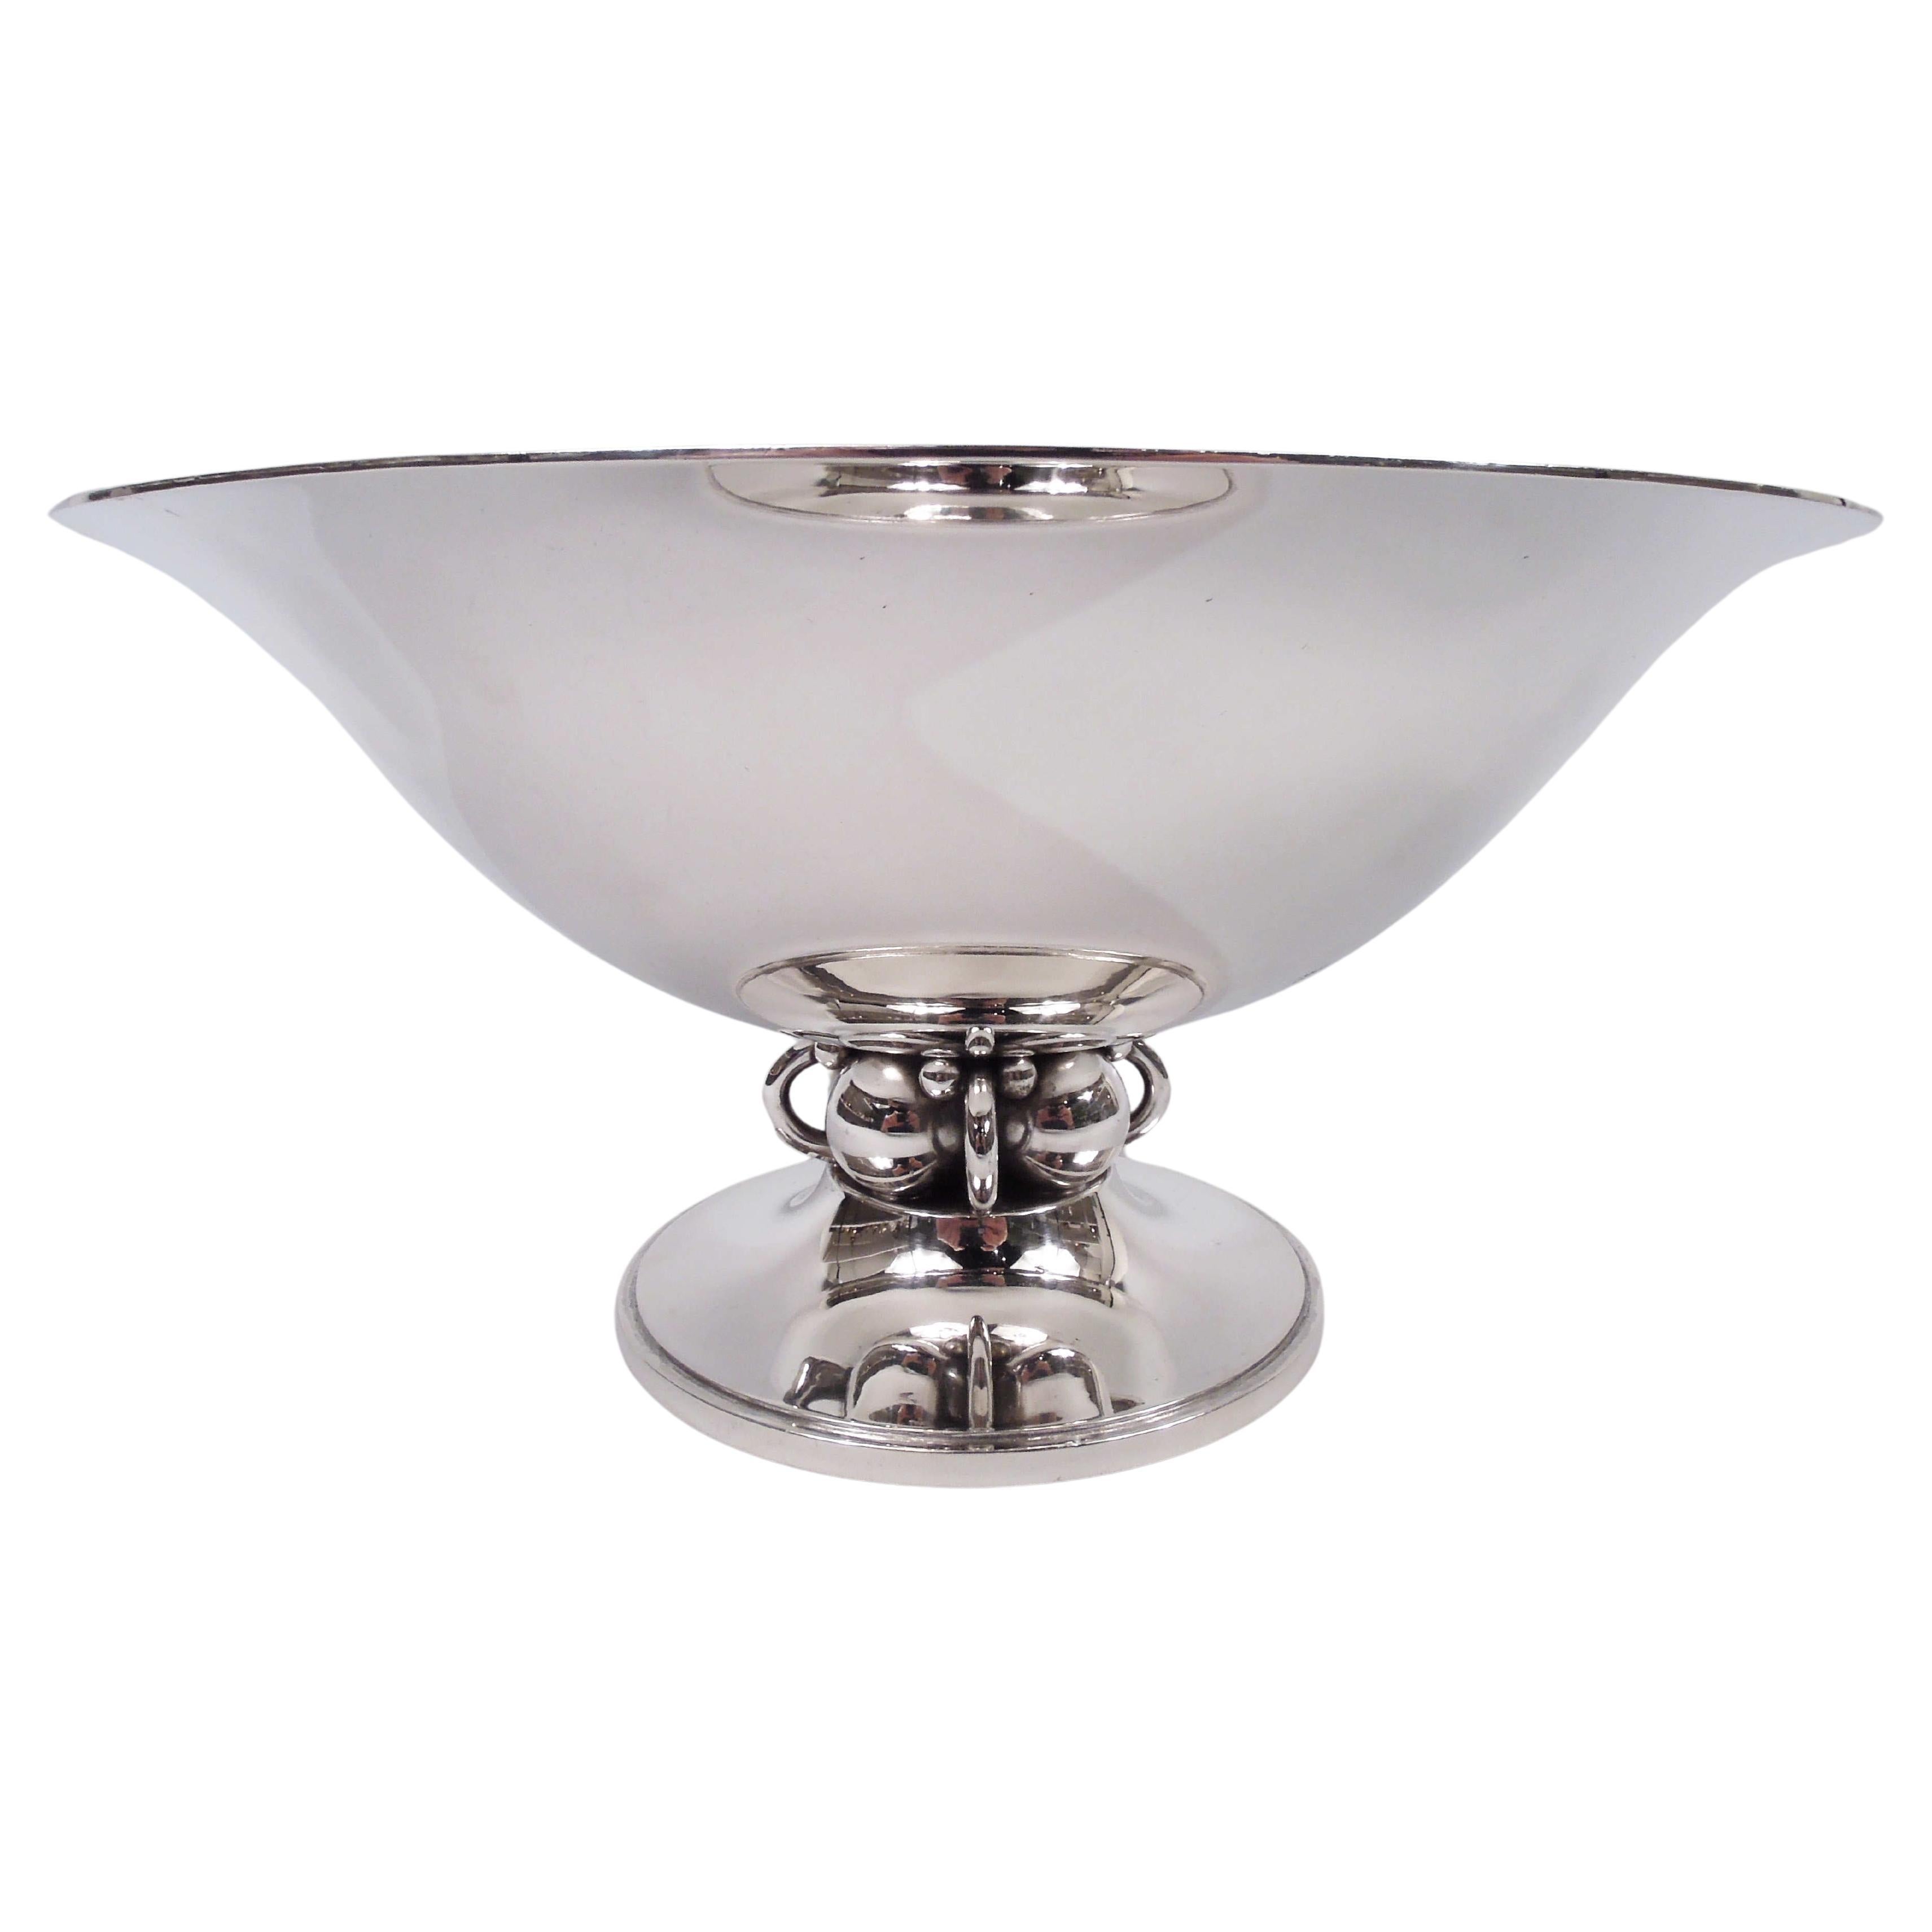 La Paglia Midcentury Modern Sterling Silver Centerpiece Bowl For Sale